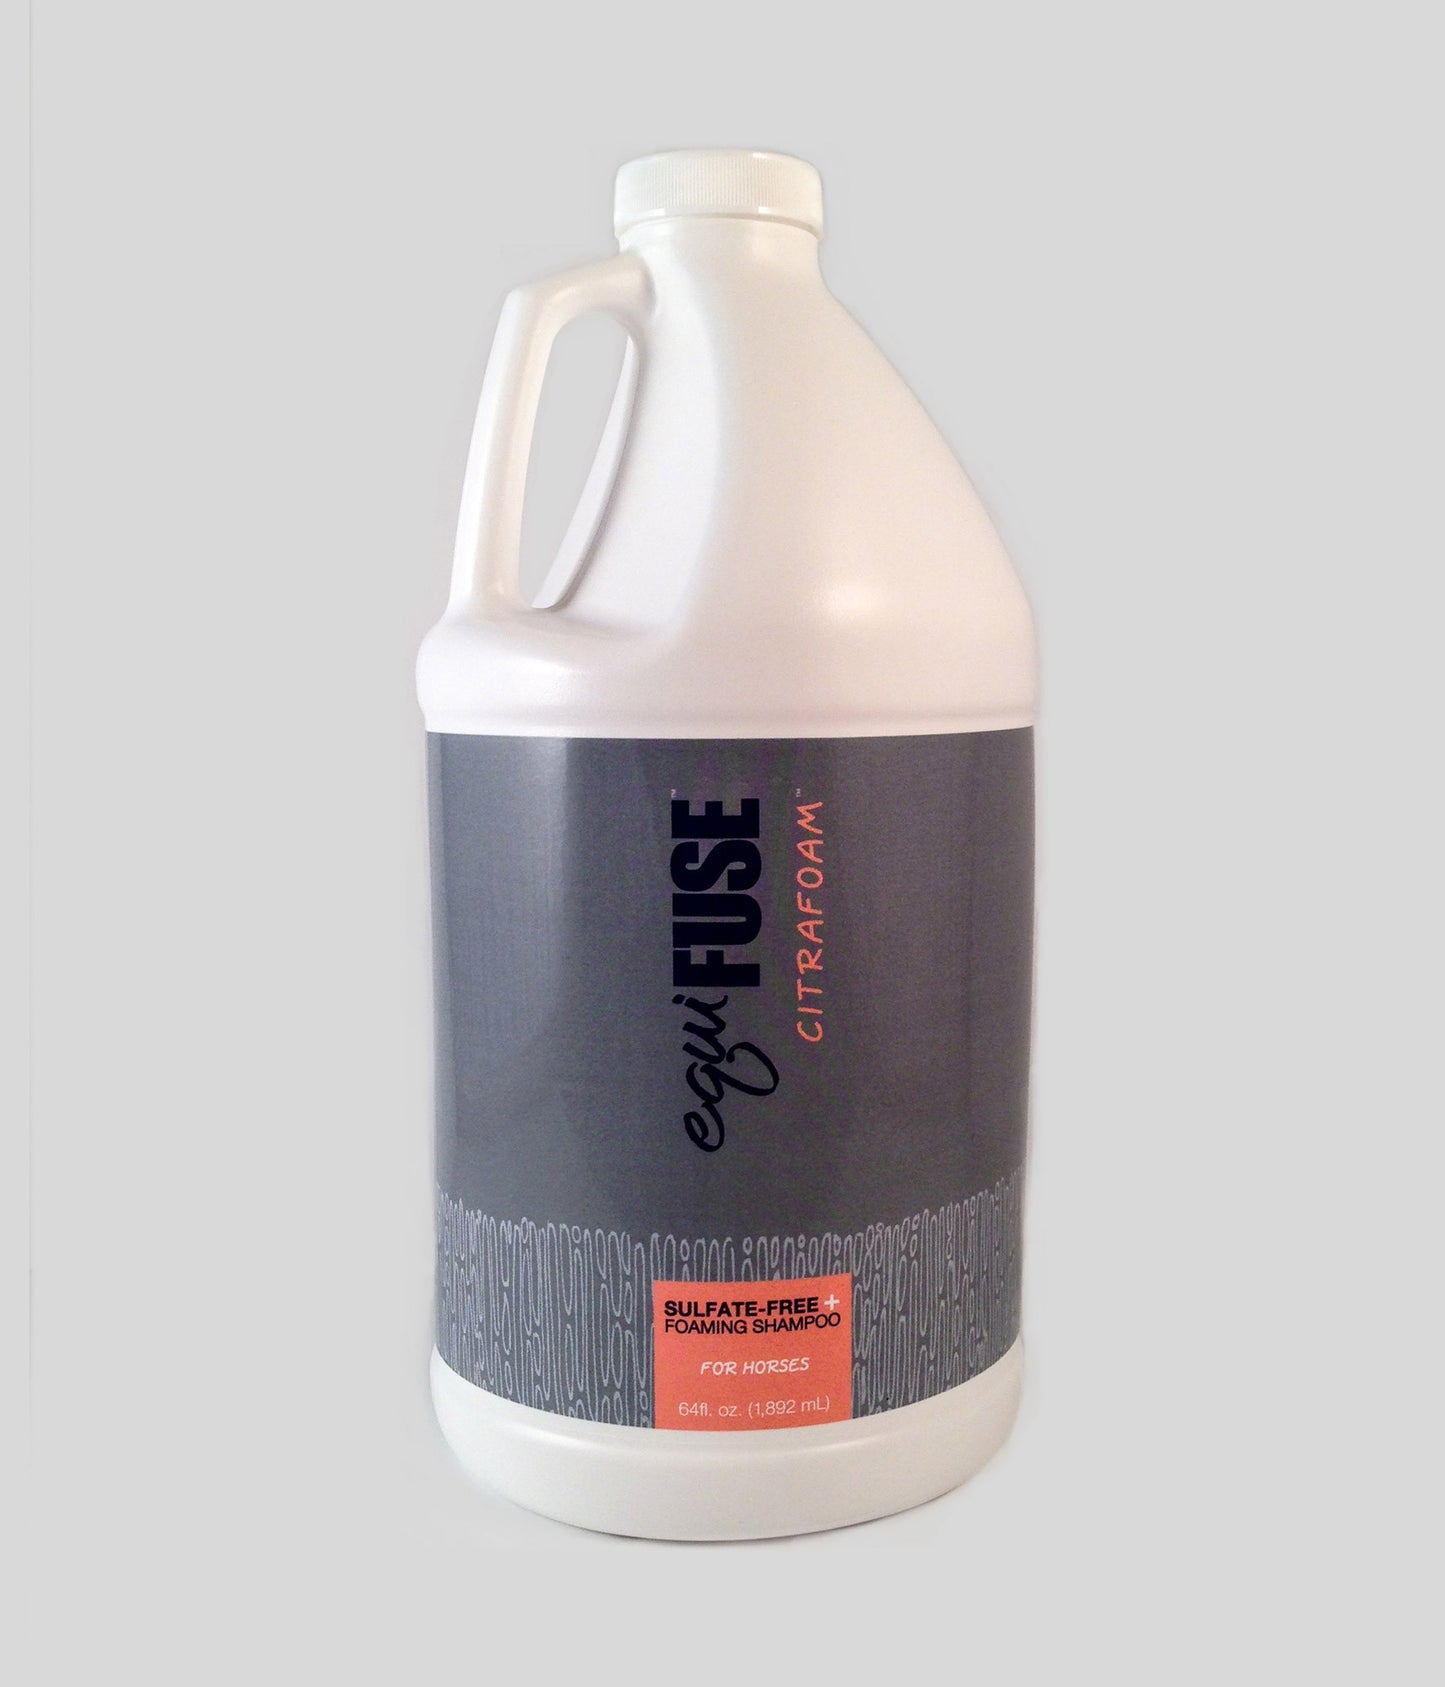 CitraFoam™ Sulfate Free + Foaming Horse Shampoo 64 oz